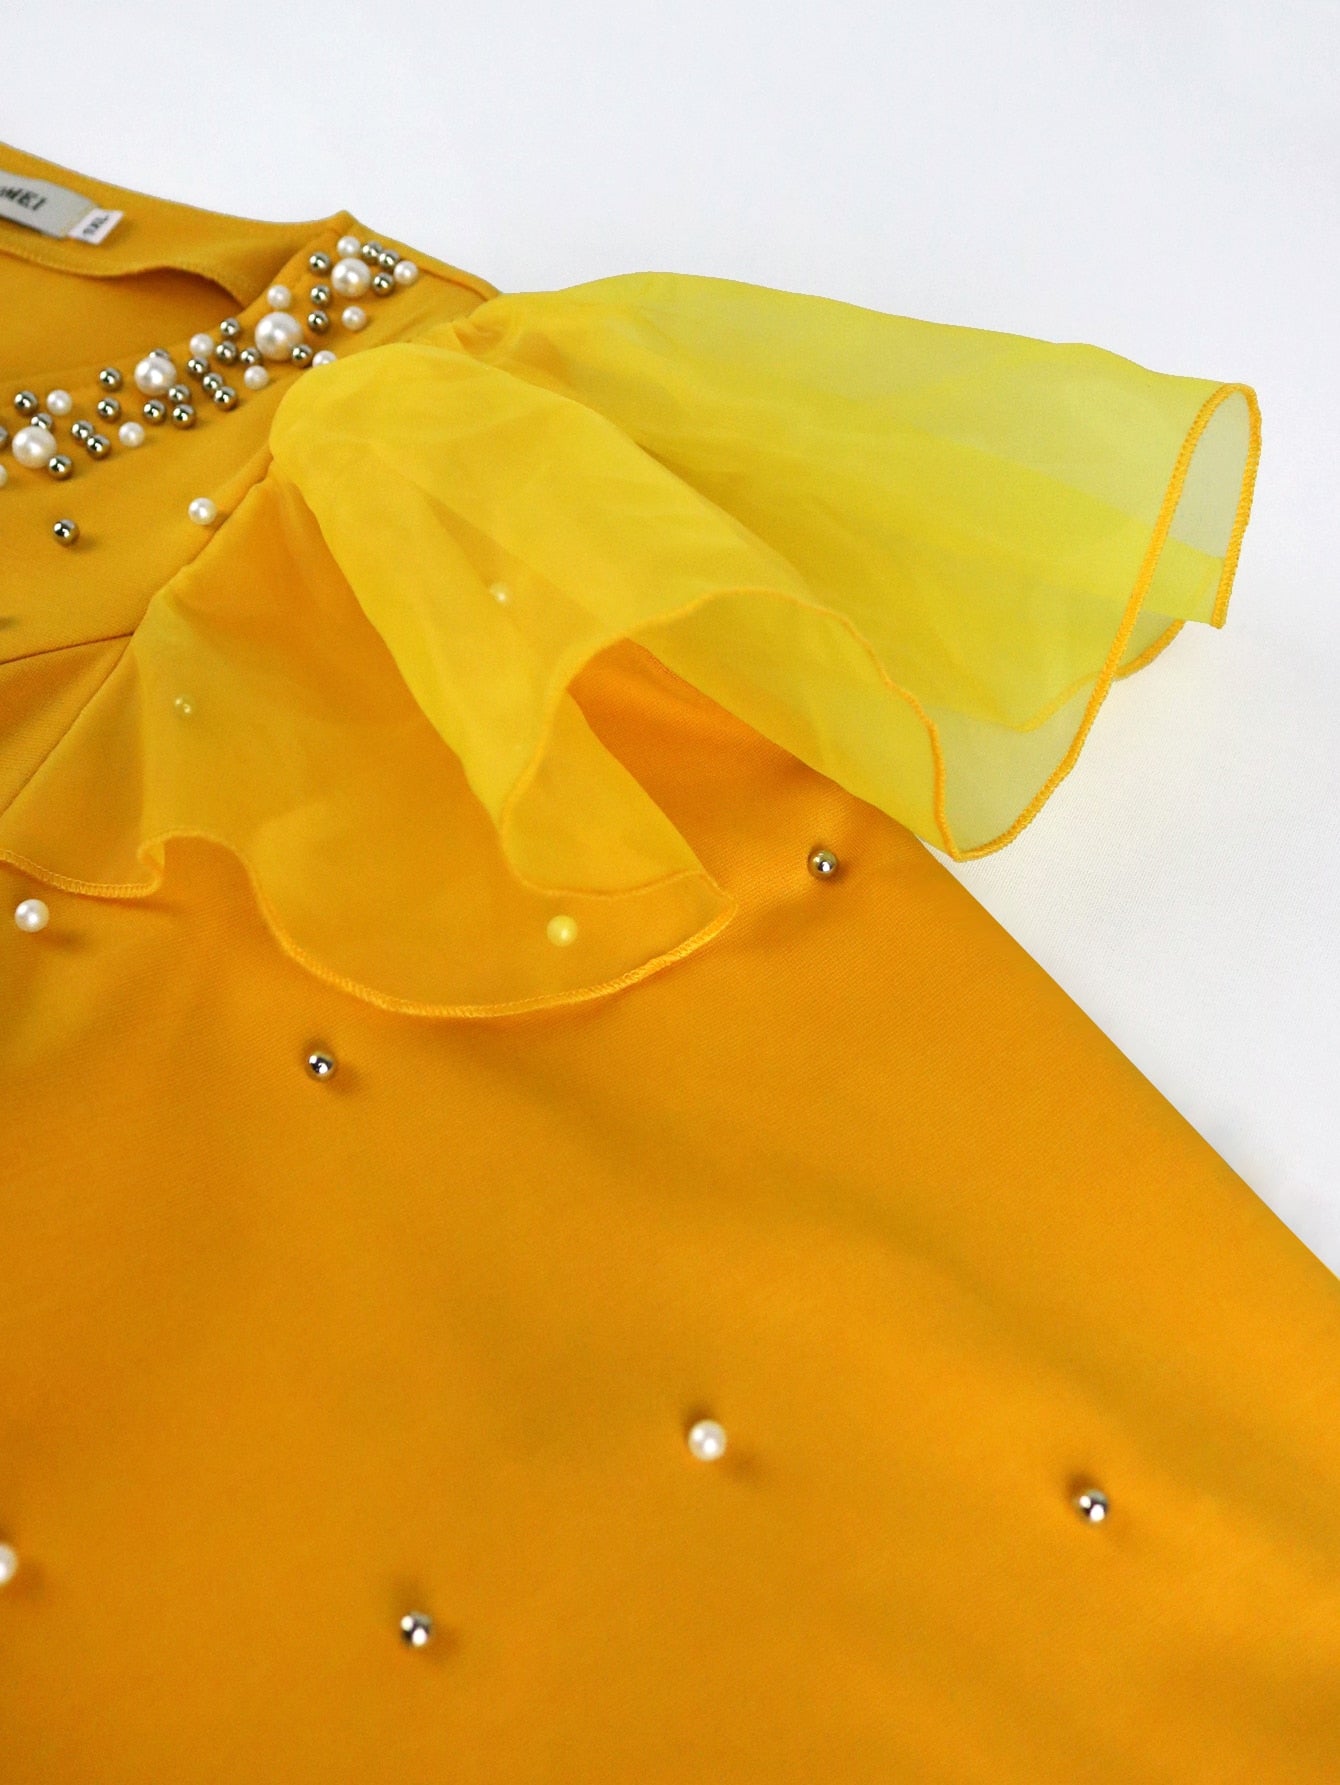 Yellow Elegant Dress